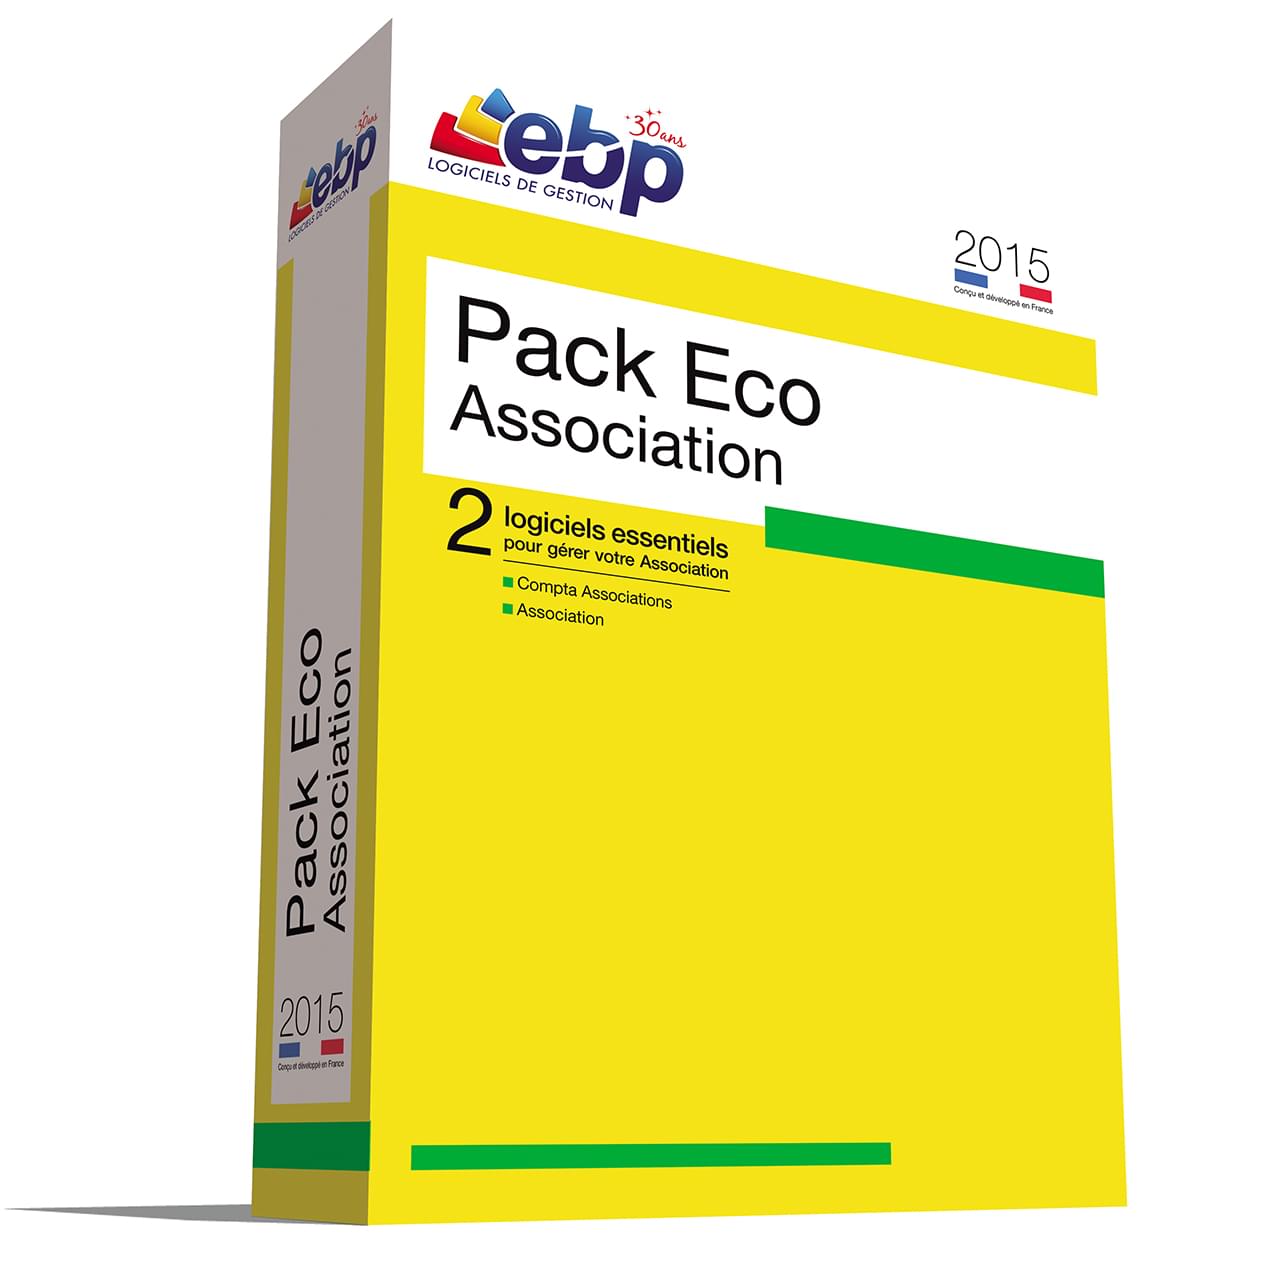 Logiciel application EBP Pack Eco Association 2015